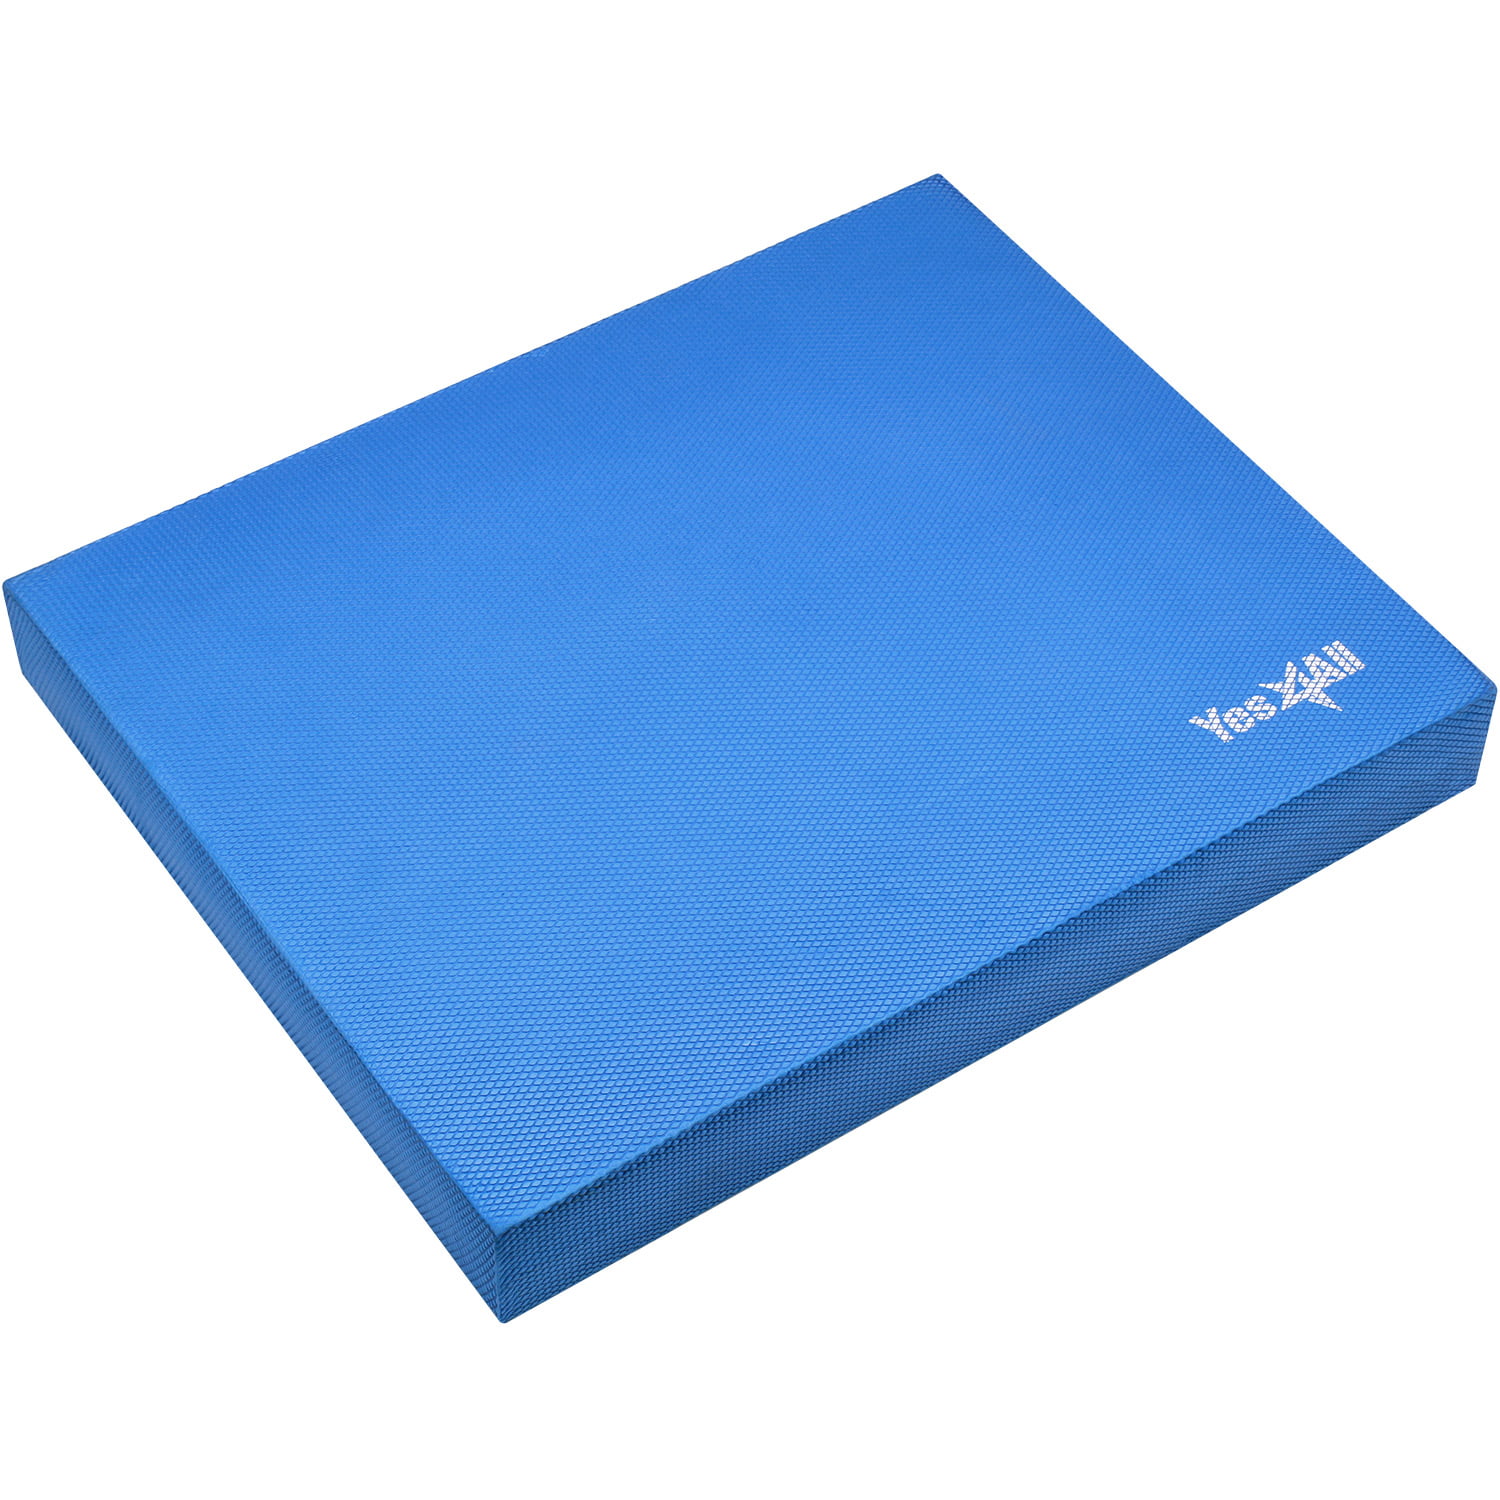 Blue Yes4All X Large Foam Balance Pad Exercise Balance Pad 